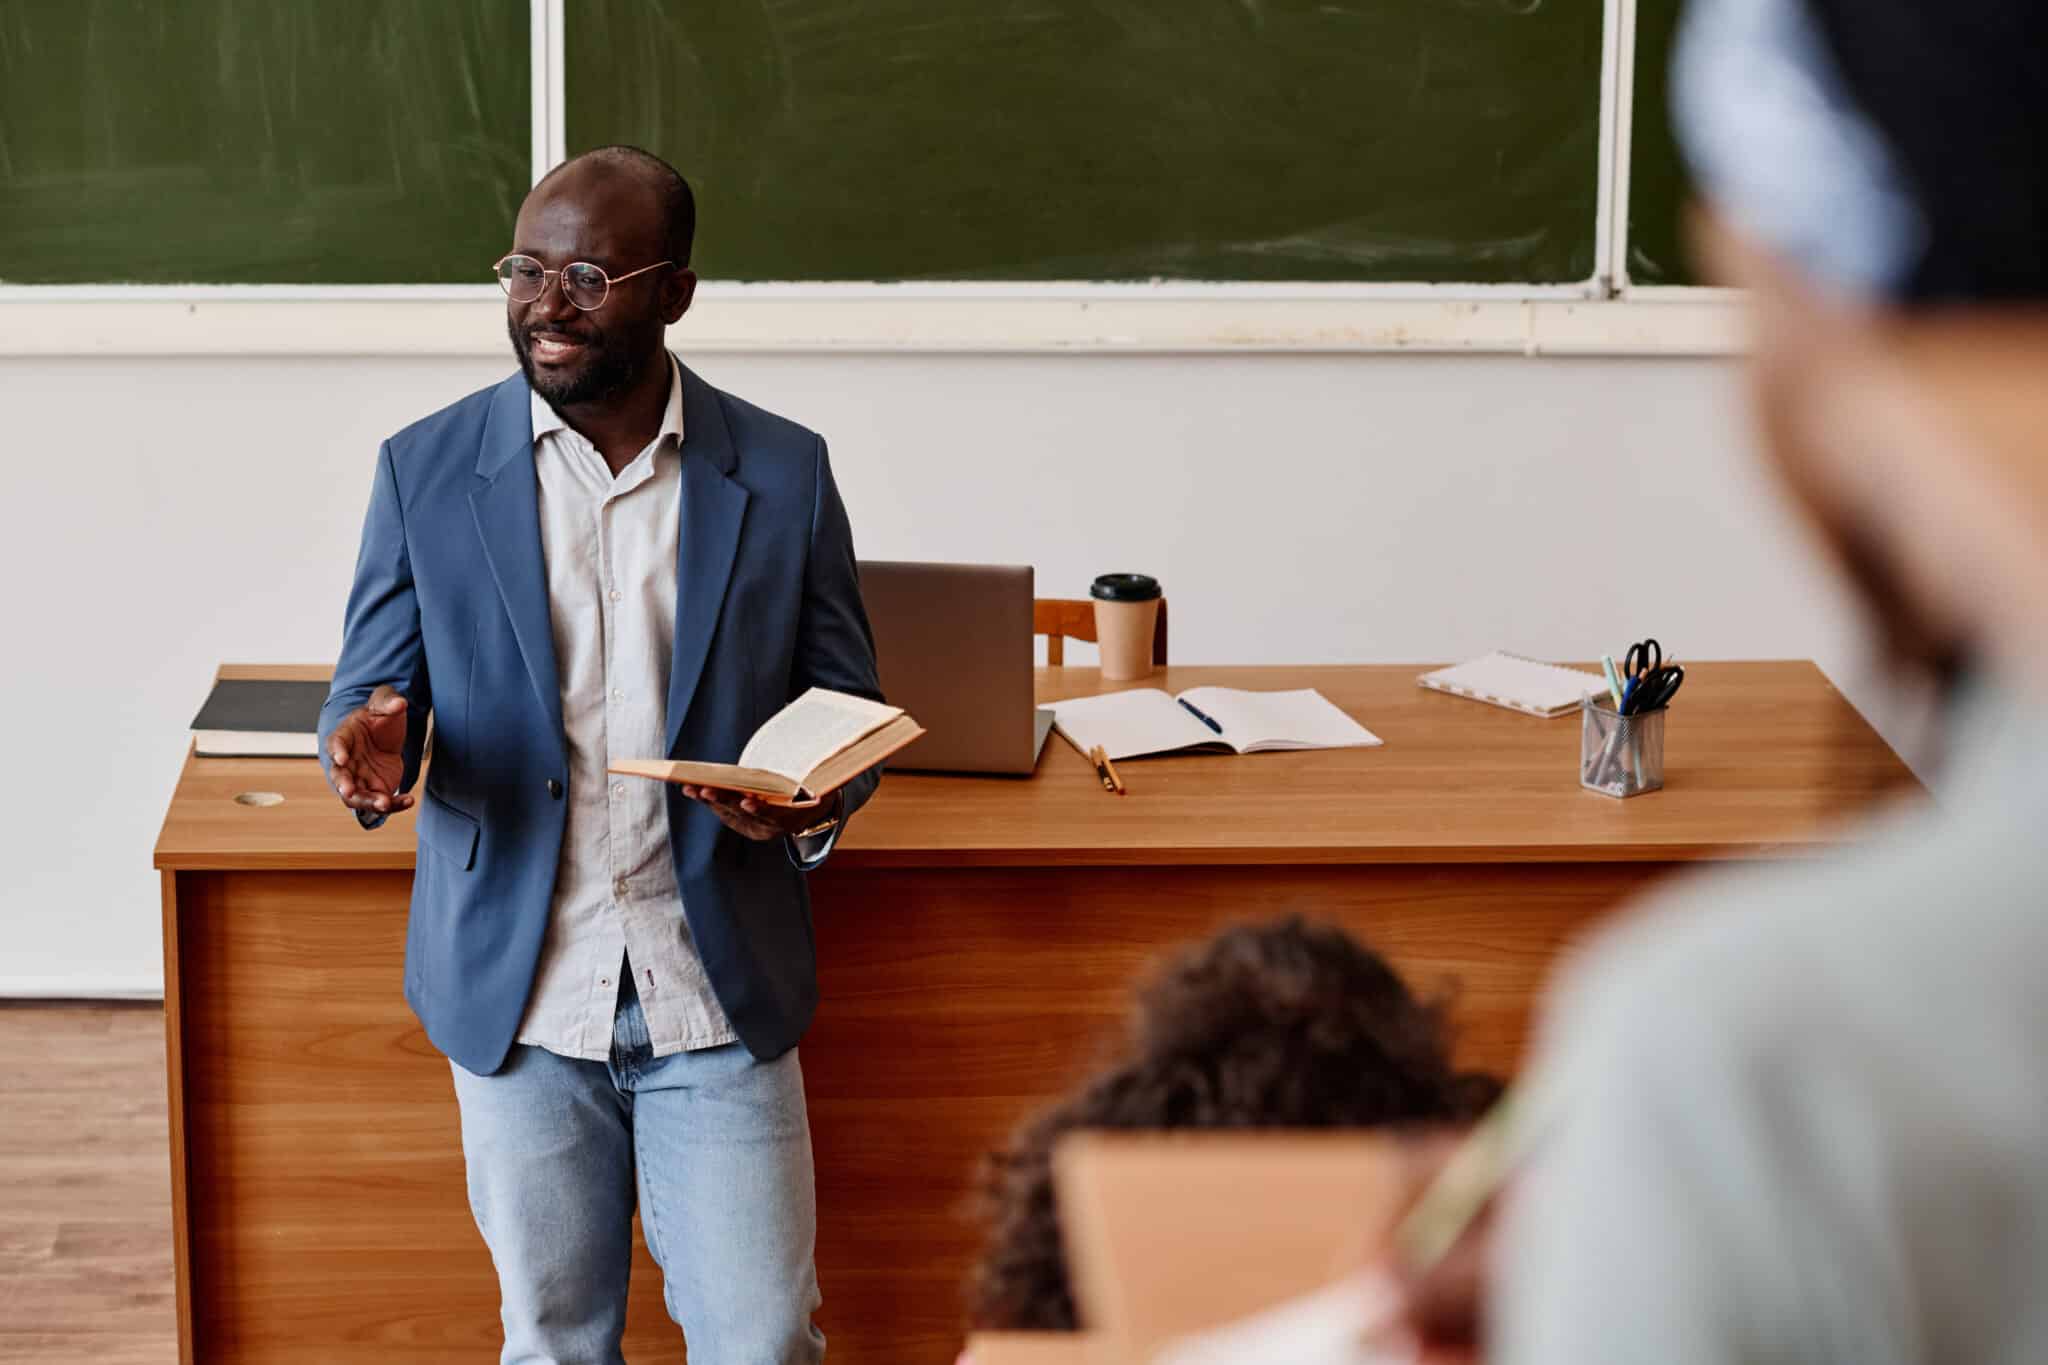 Black faculty member teaching higher education